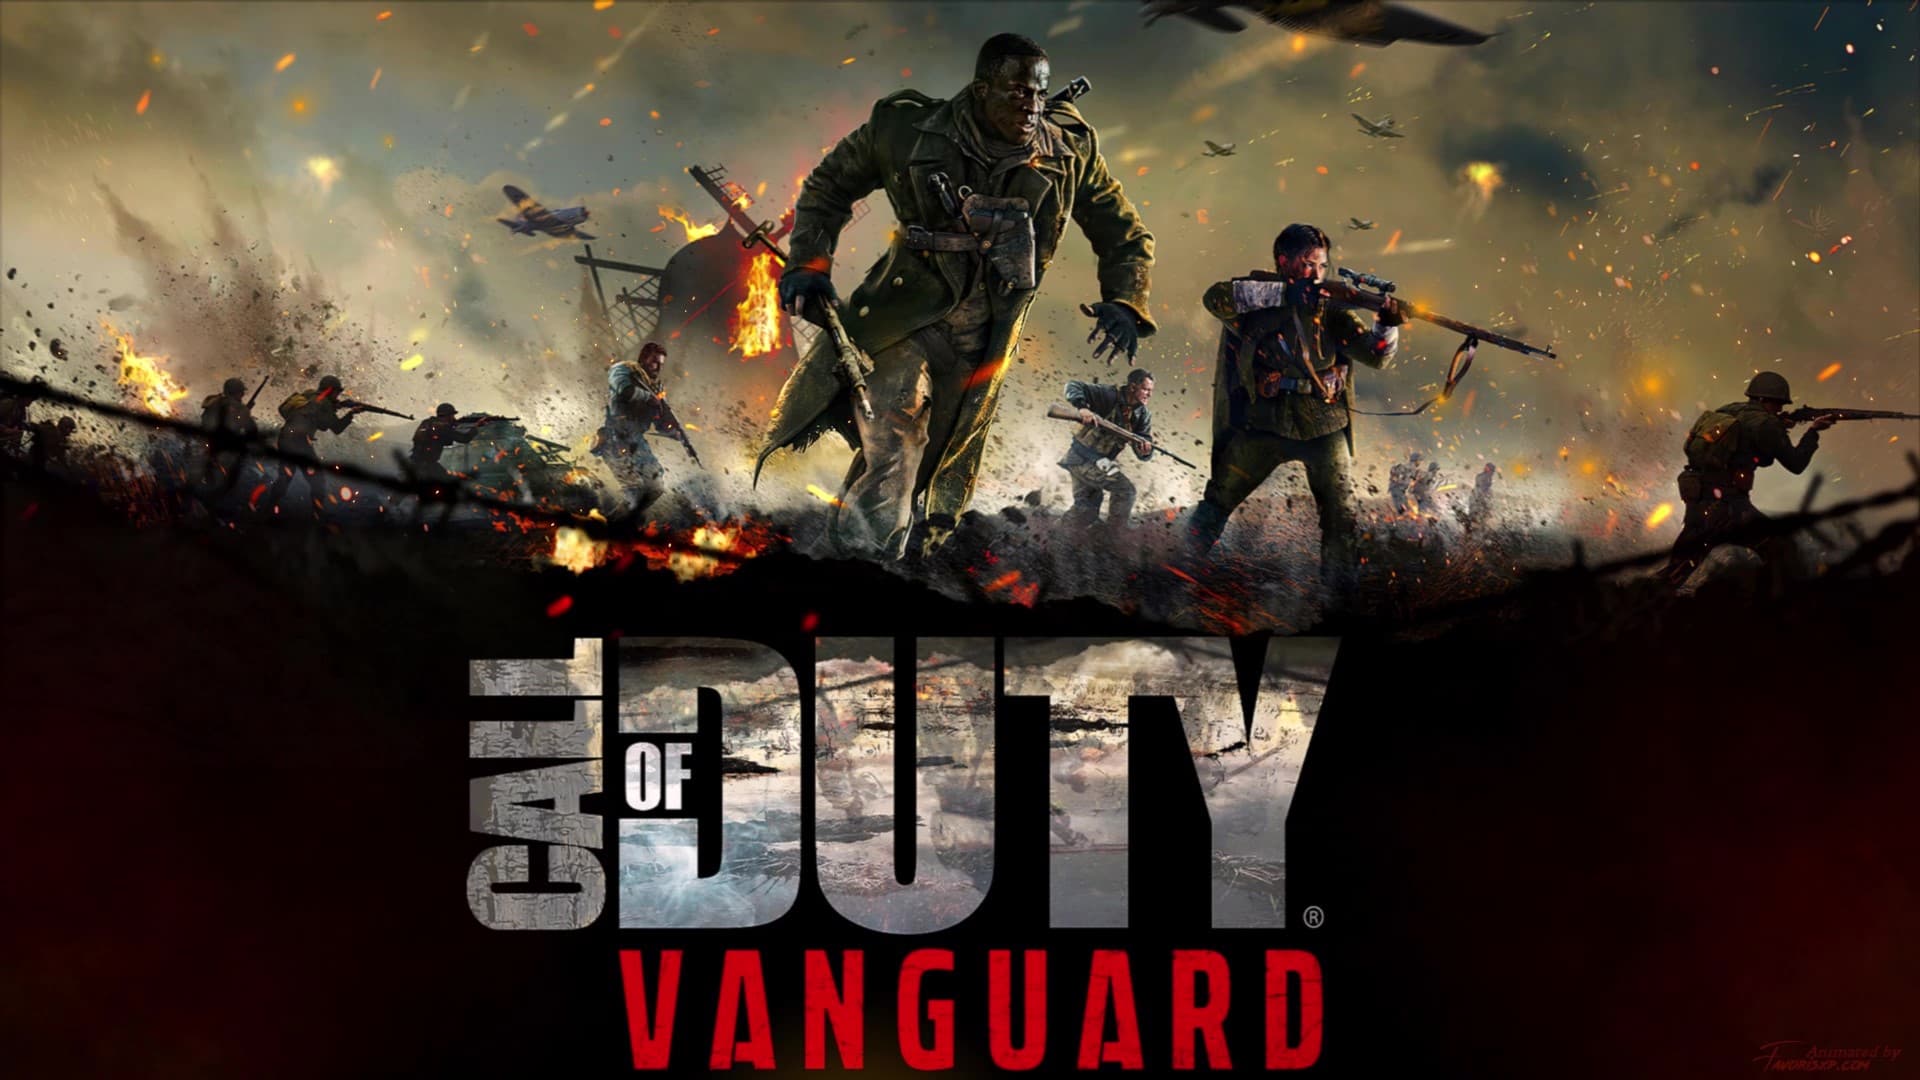 Call of Duty Vanguard Live Wallpaper | by Favorisxp on DeviantArt